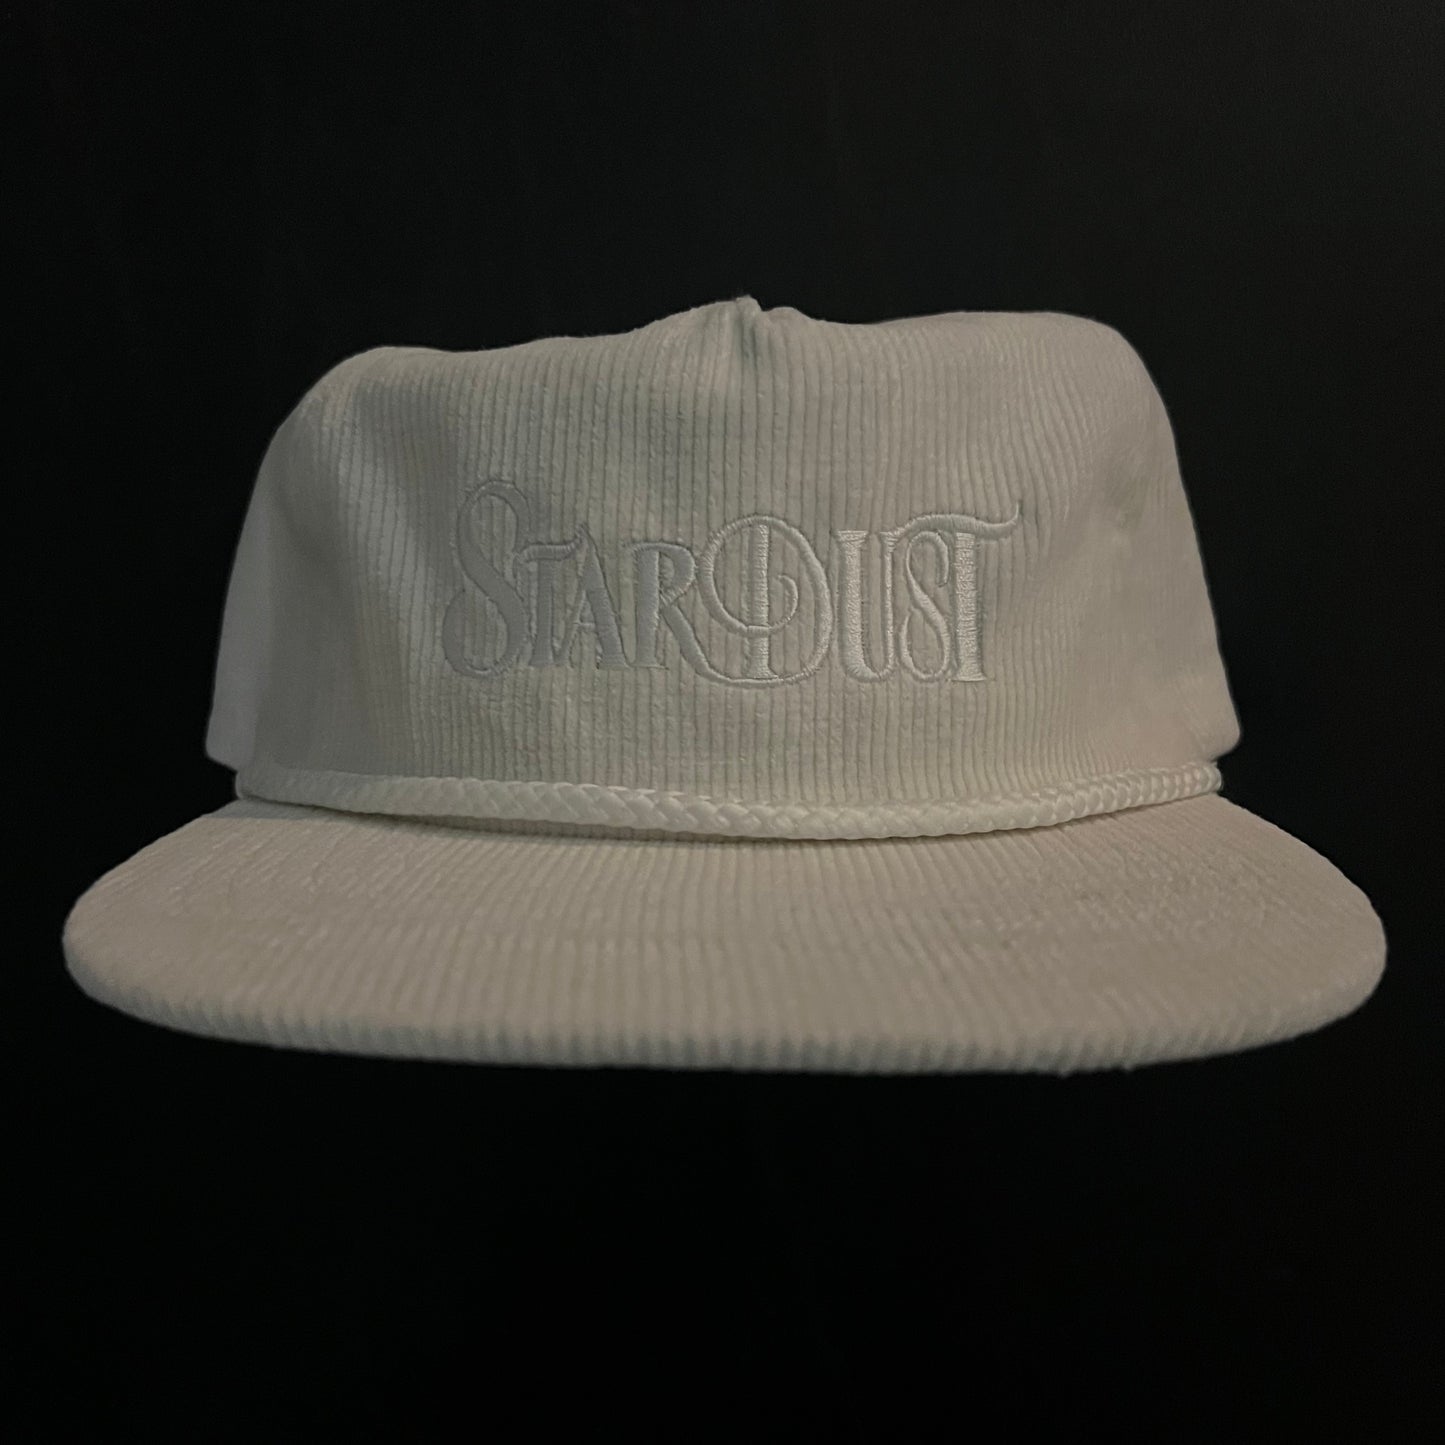 Stardust Wanderlust Corduroy Snapback Hat 001 White / White